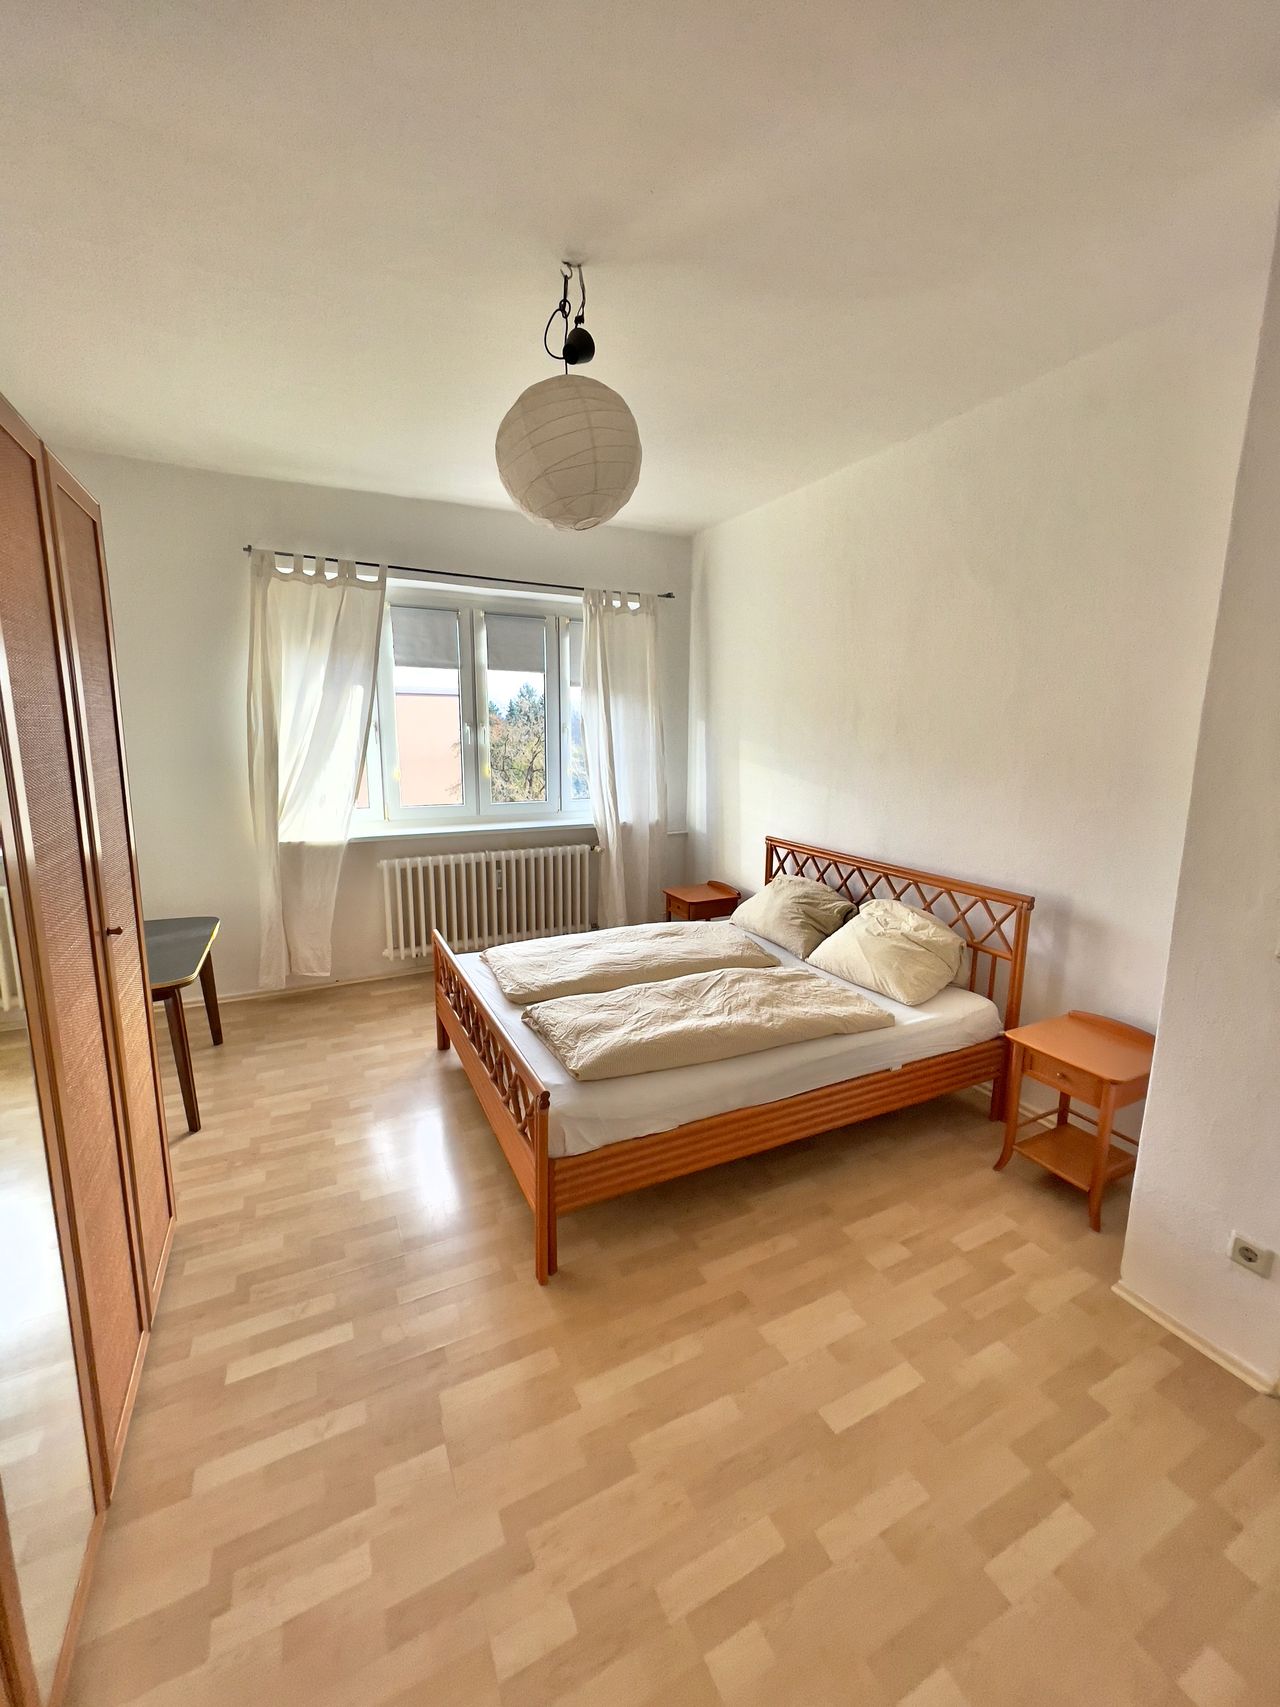 Lovely apartment in Steglitz